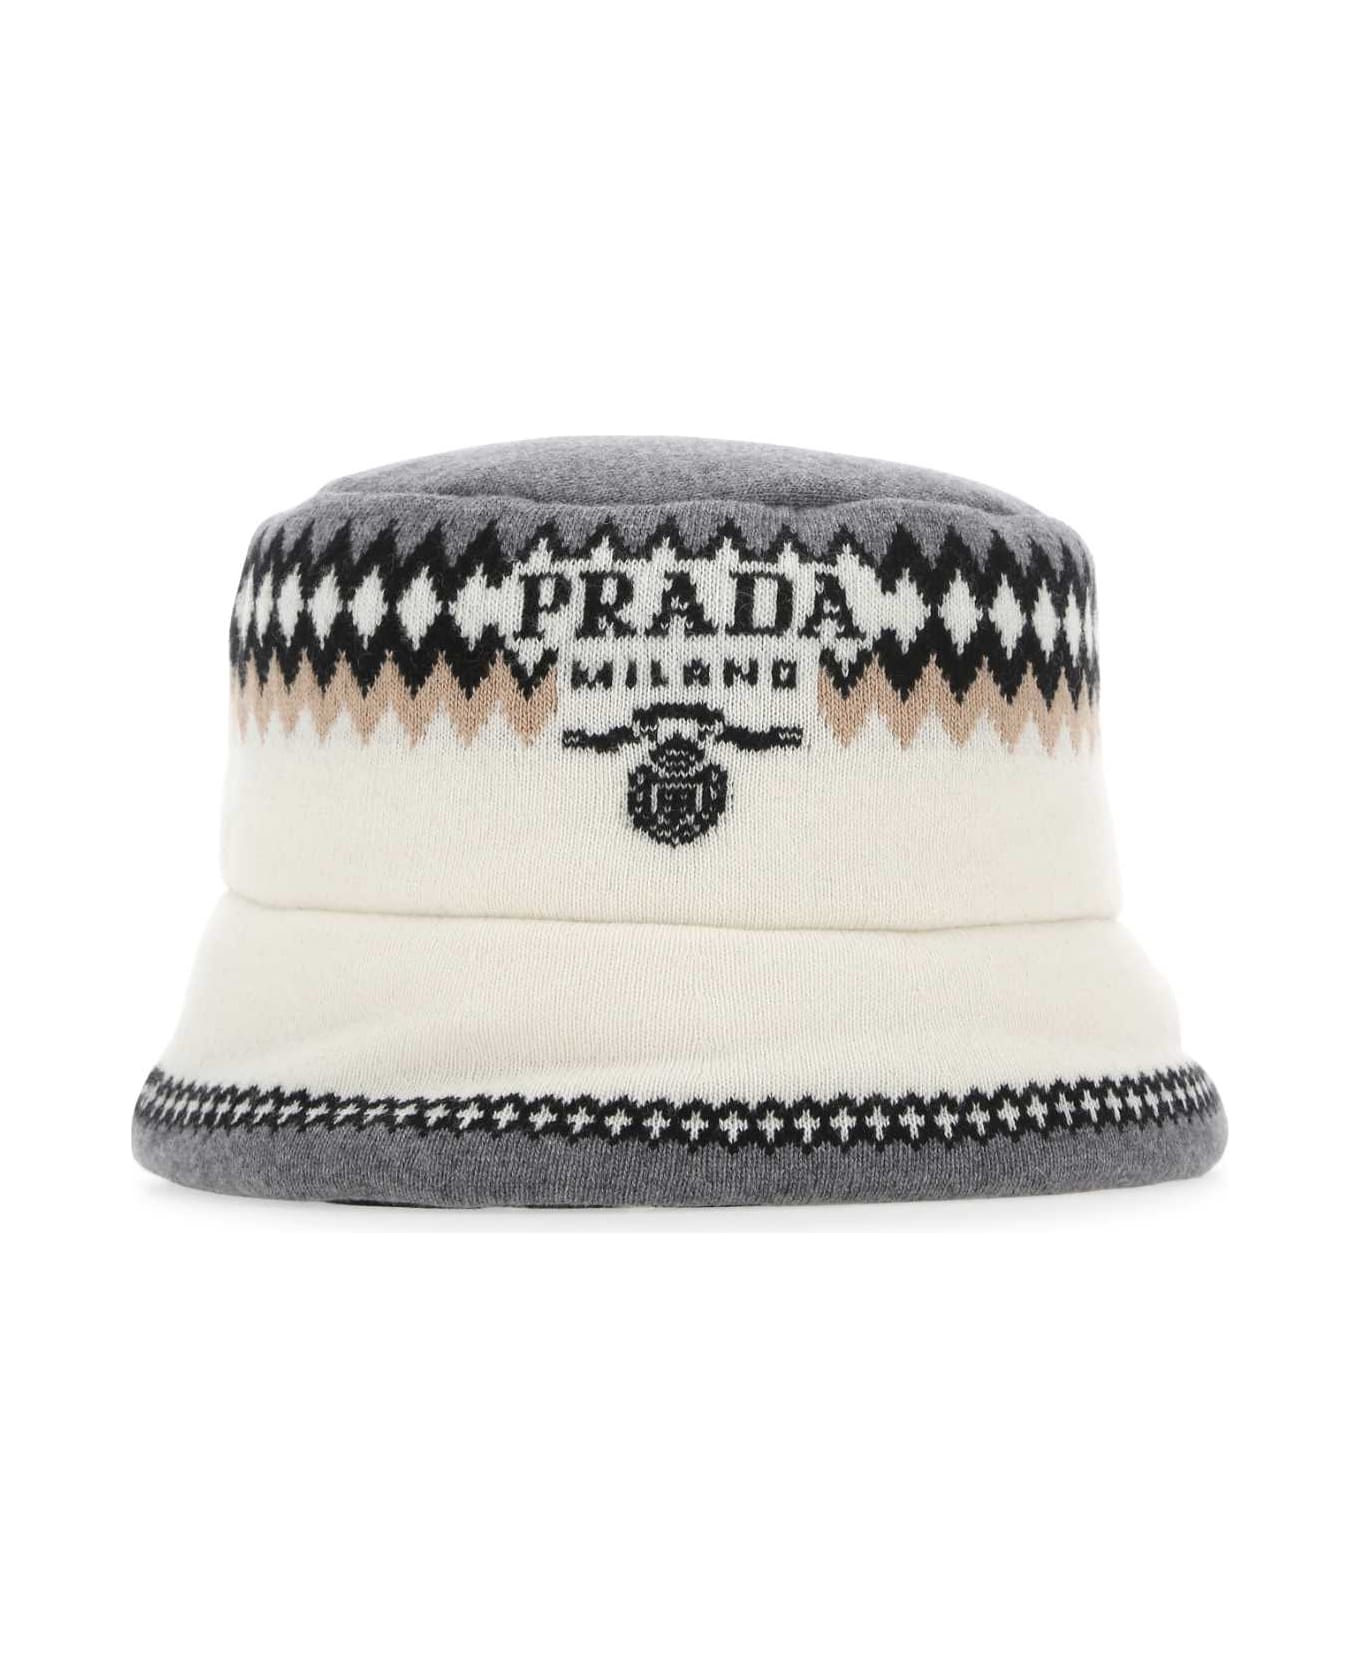 Prada Embroidered Wool Blend Hat - CAMMELLO